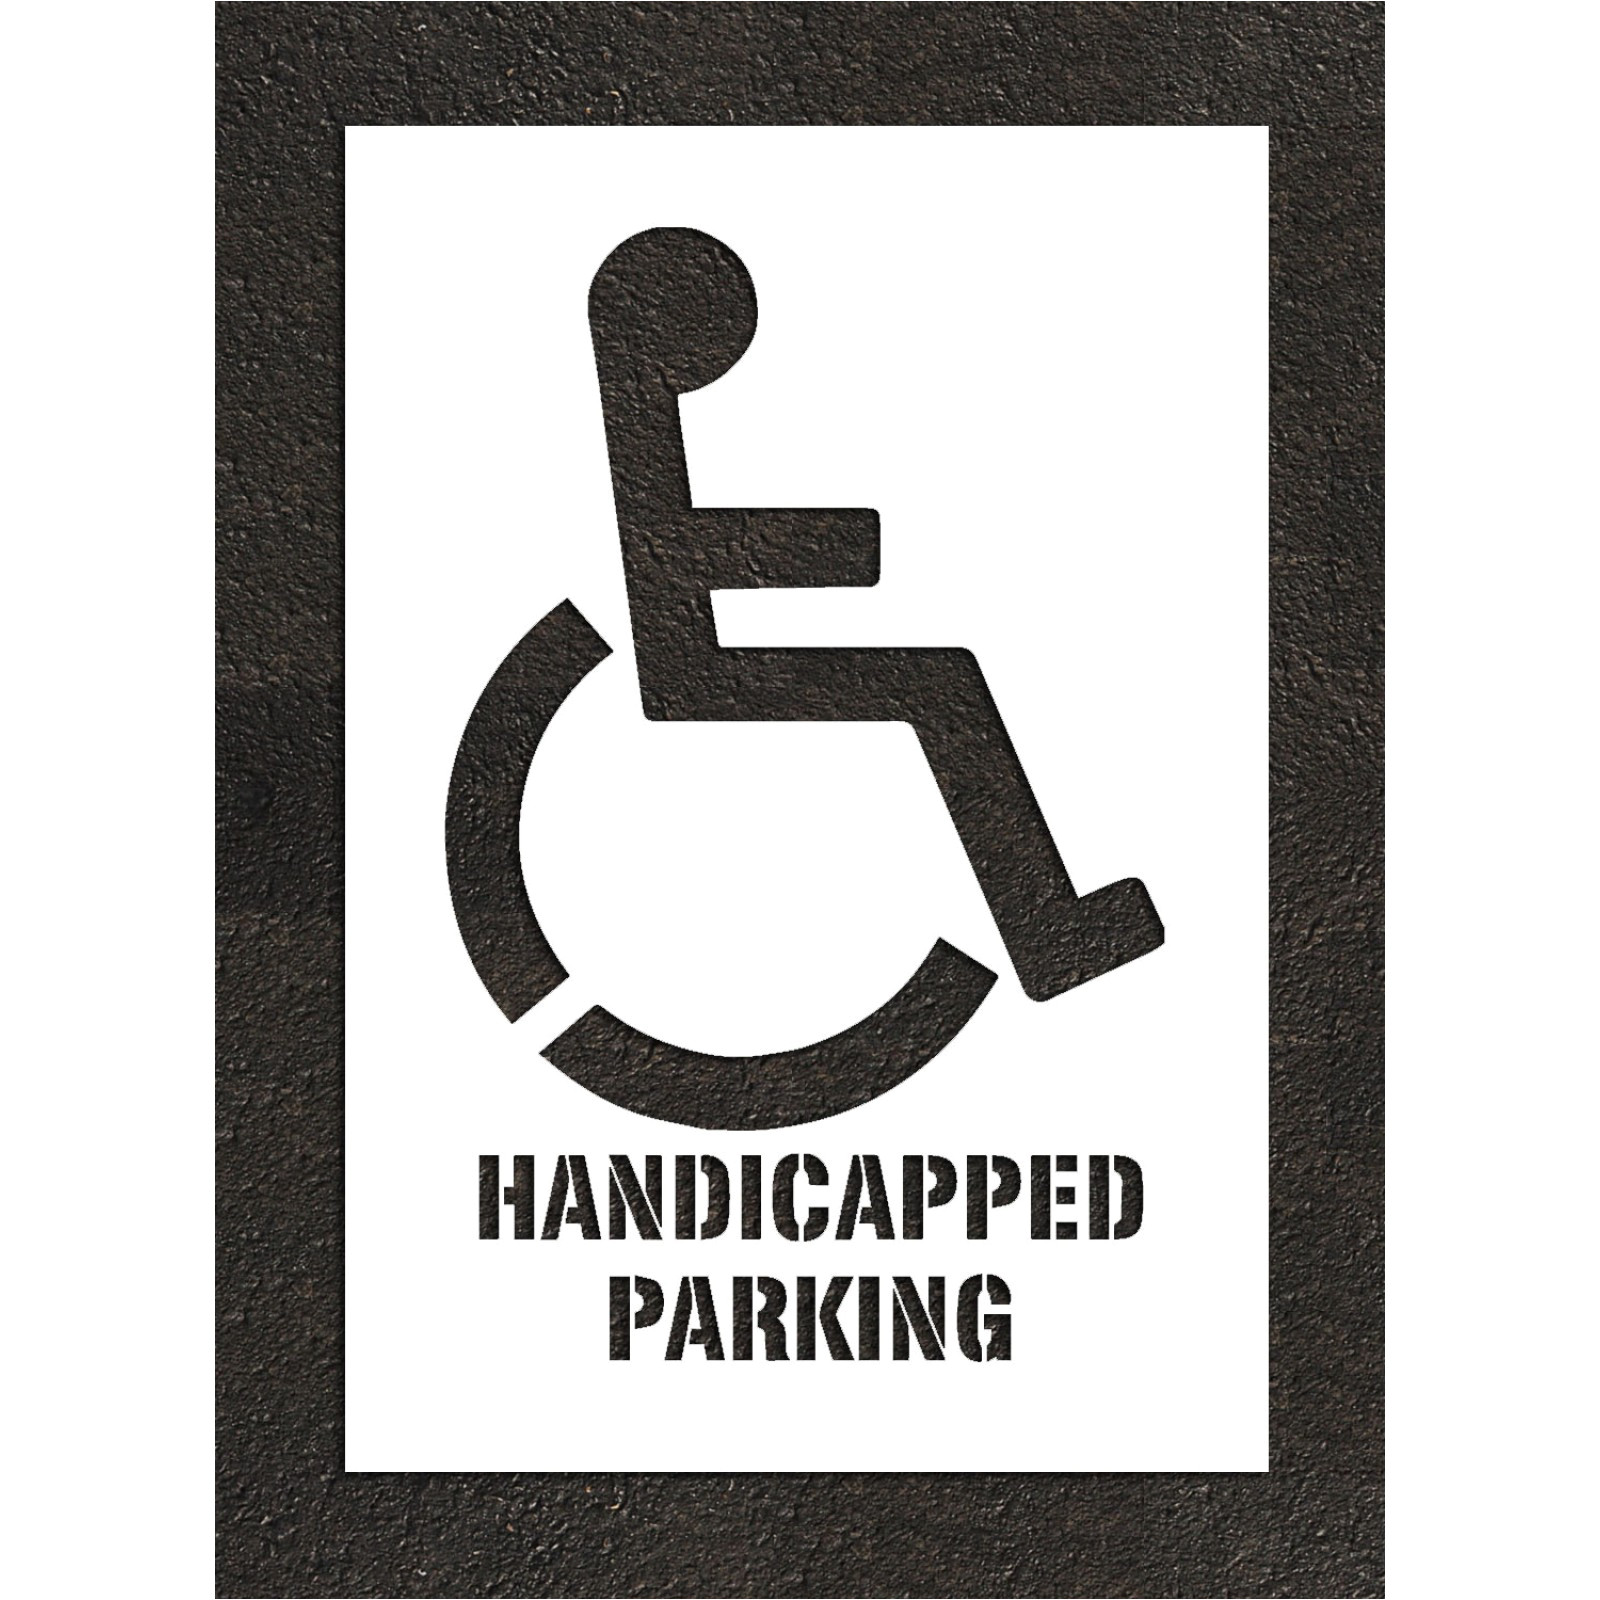 38 handicap parking handicap stencil